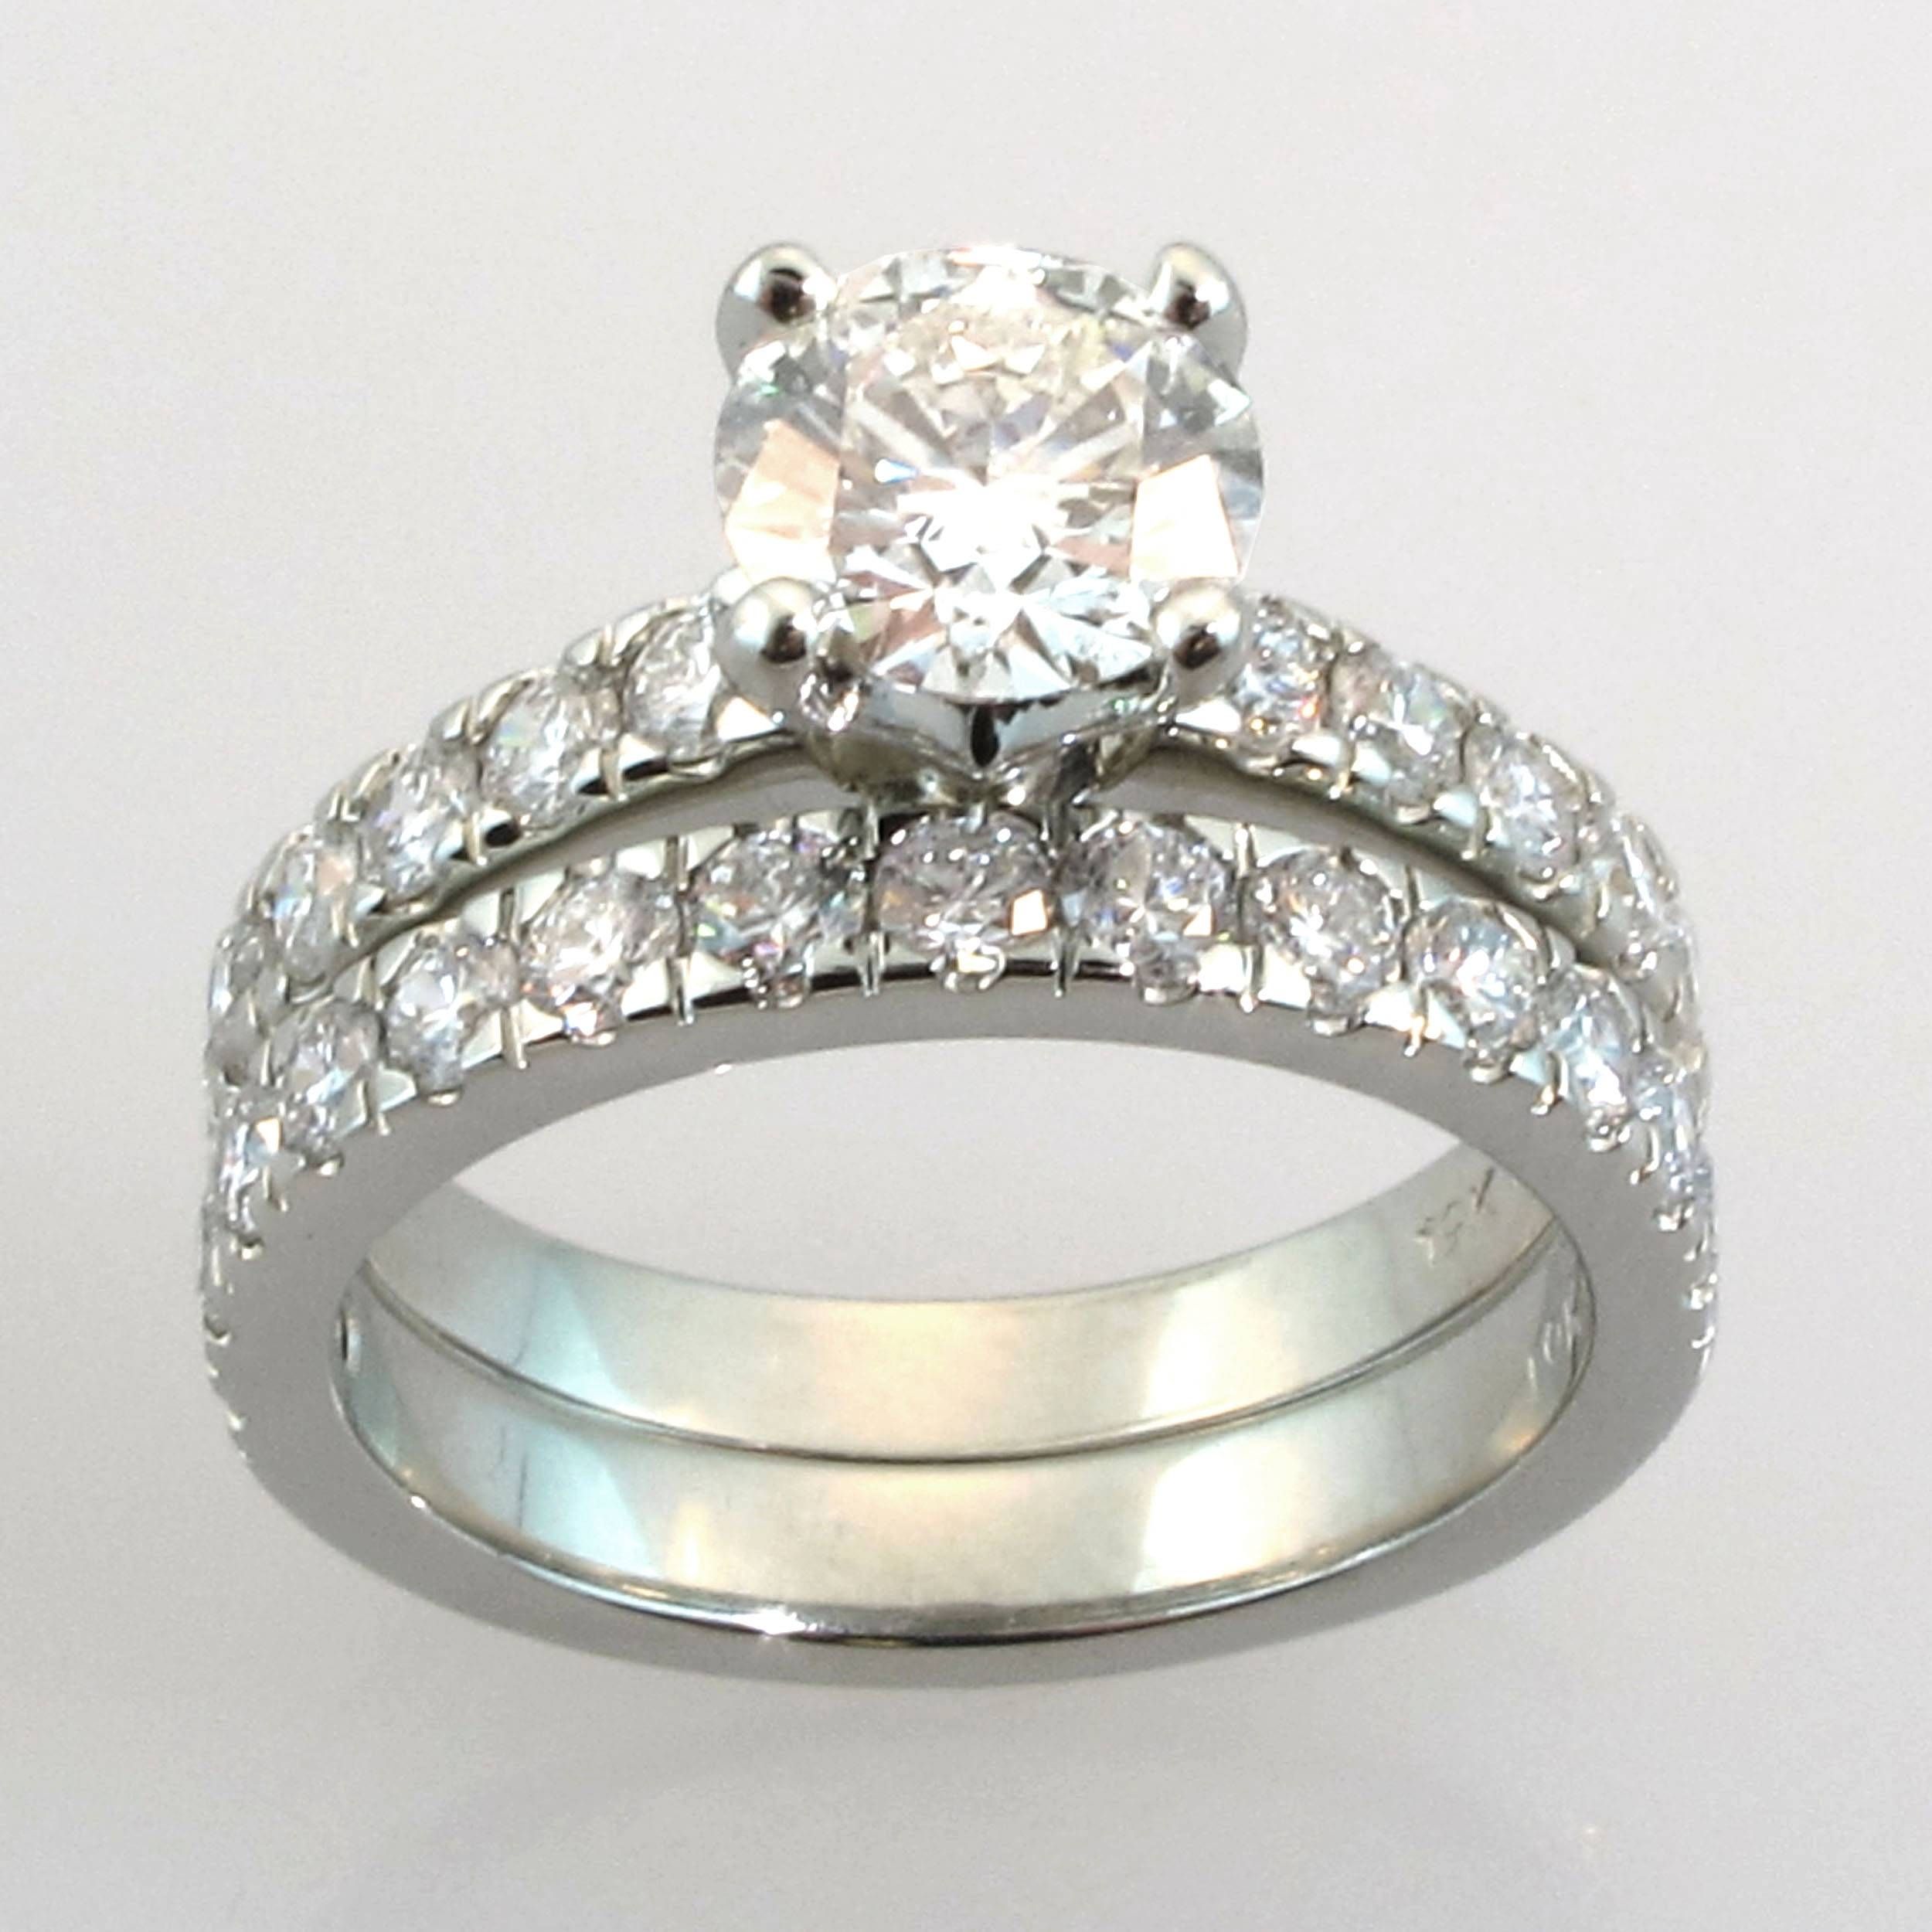 Fingerprint Inside Wedding Ring Tags : Fingerprint Wedding Ring With Engagement Rings Wedding Bands Sets (View 9 of 15)